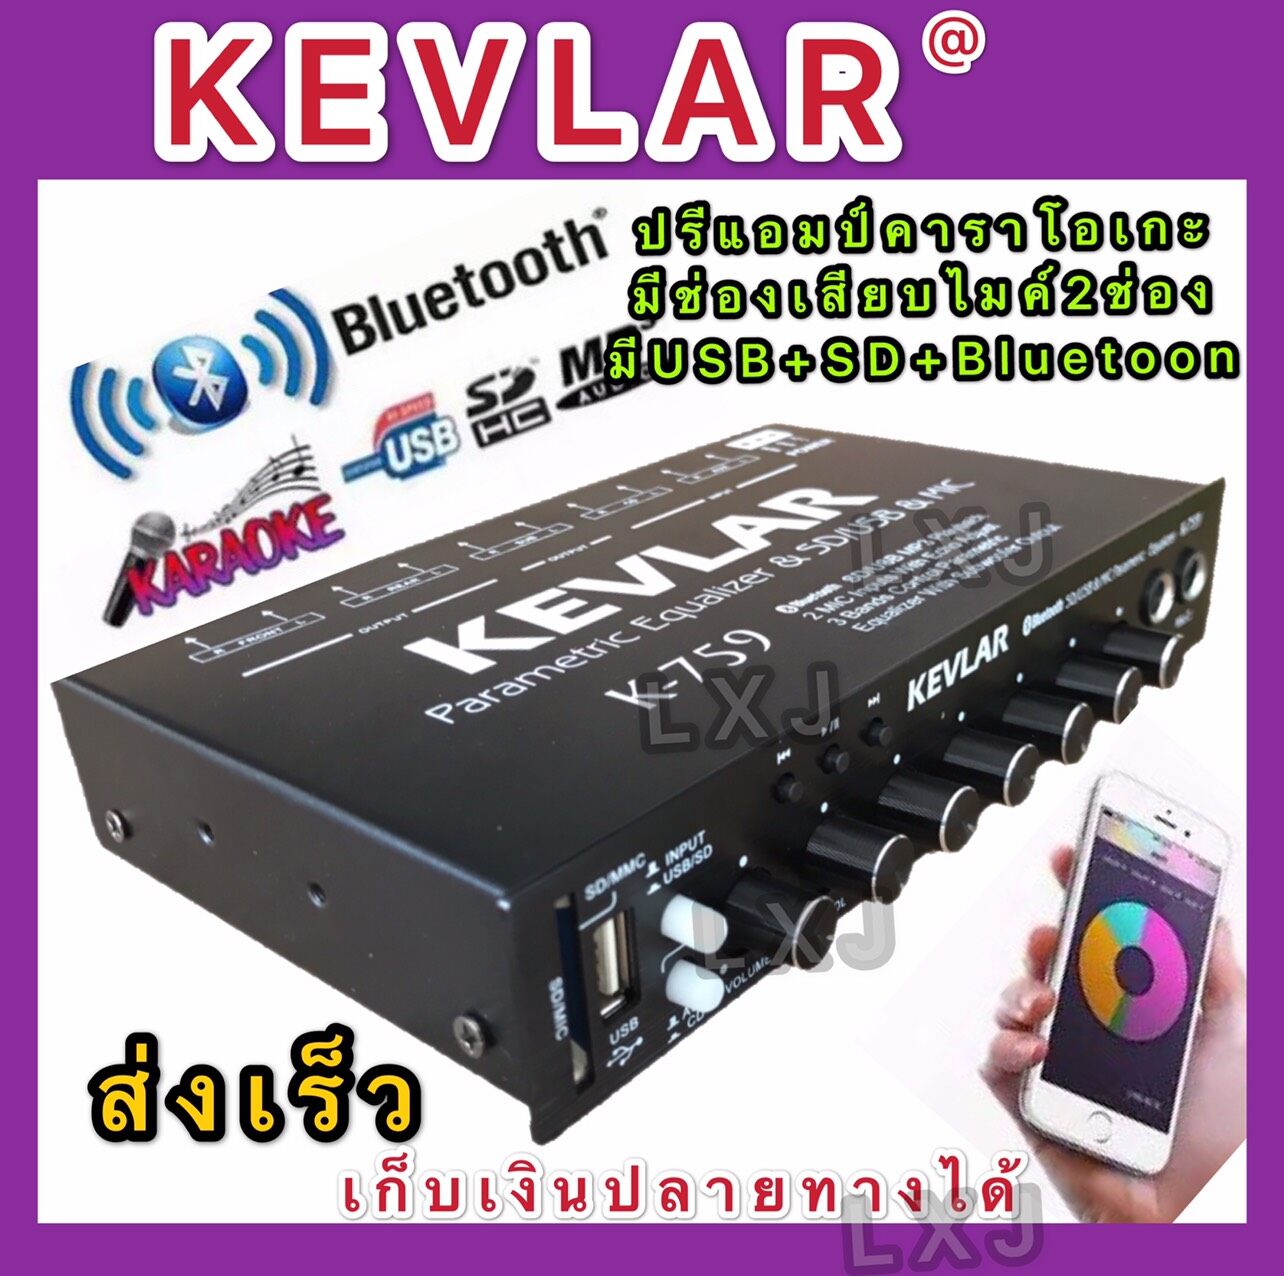 KEVLAR ปรีแอมป์คาราโอเกะรถยนต์ MP3 มีช่องเสียบไมค์2ช่อง มีUSB+SD มี Bluetooth รุ่น M-759